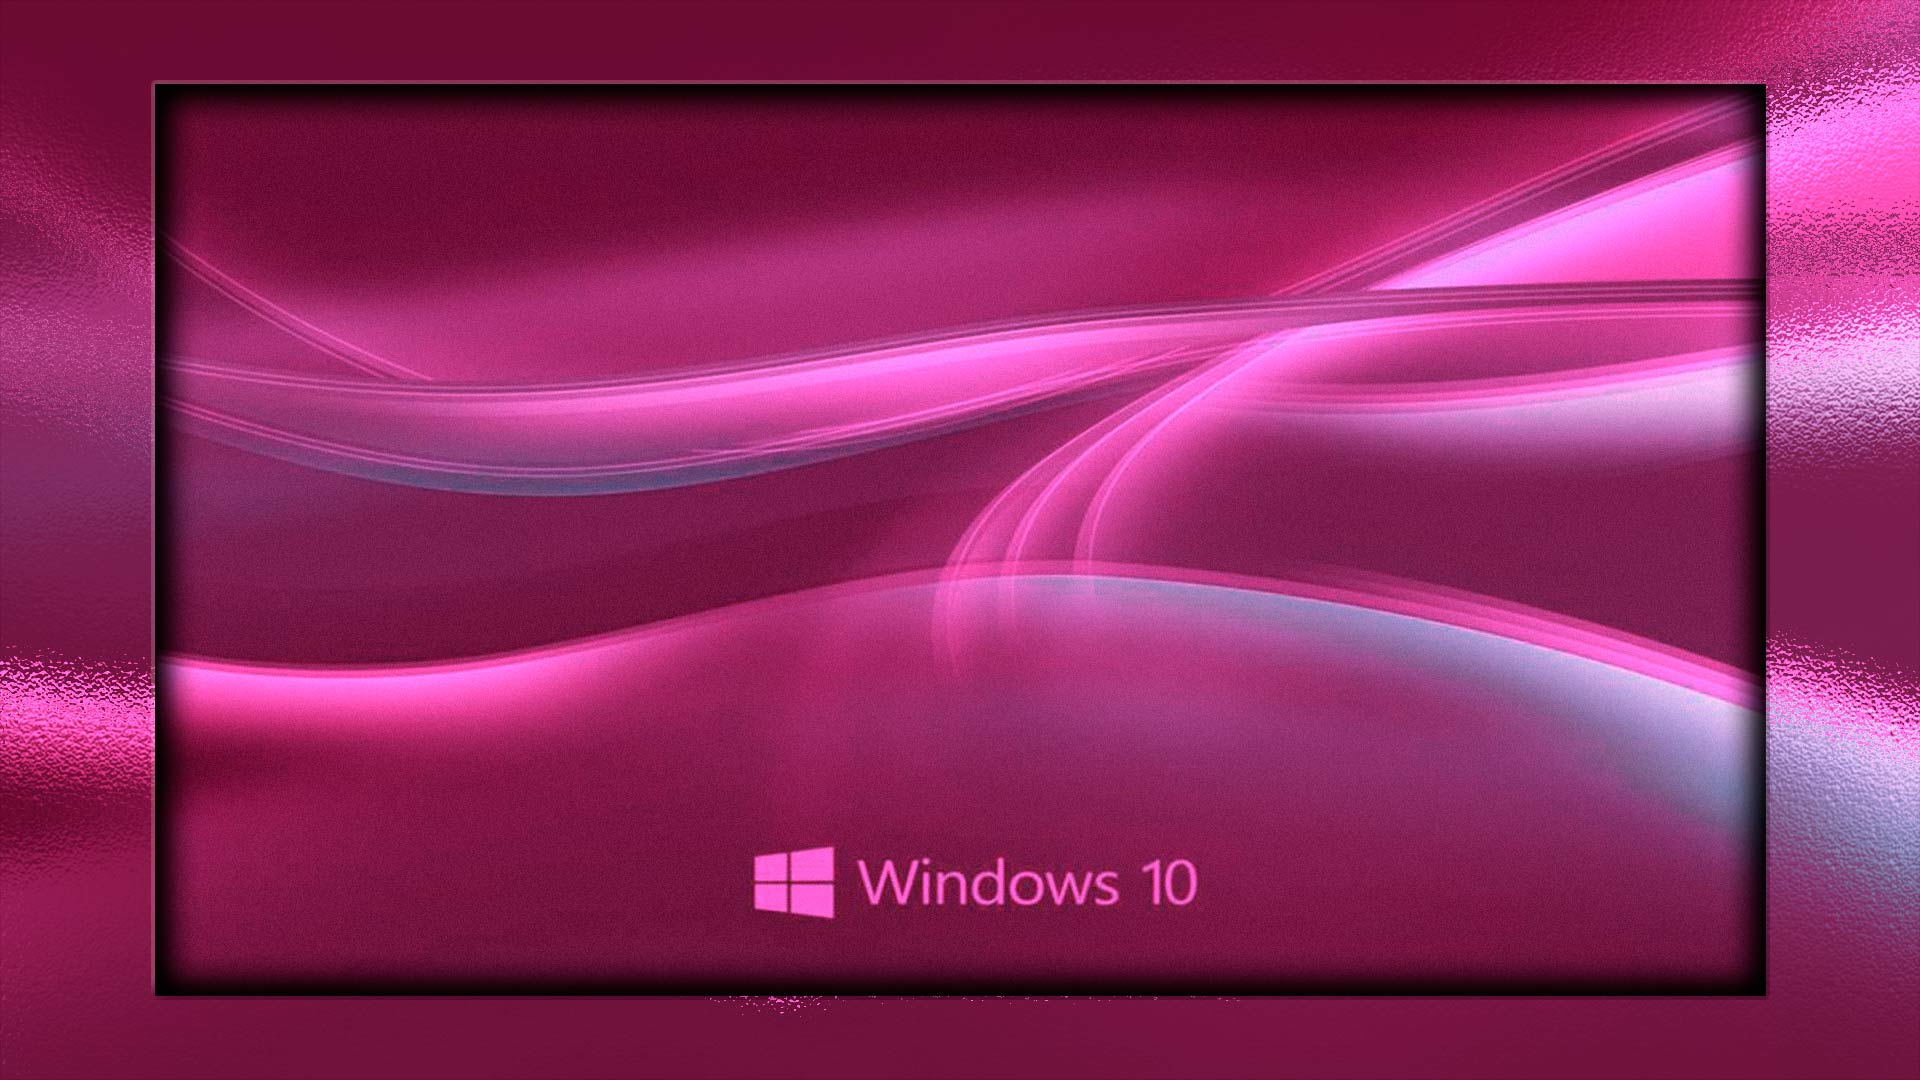 Windows 10 wallpaperWindows 10 imageWindows 10 hd 1920x1080